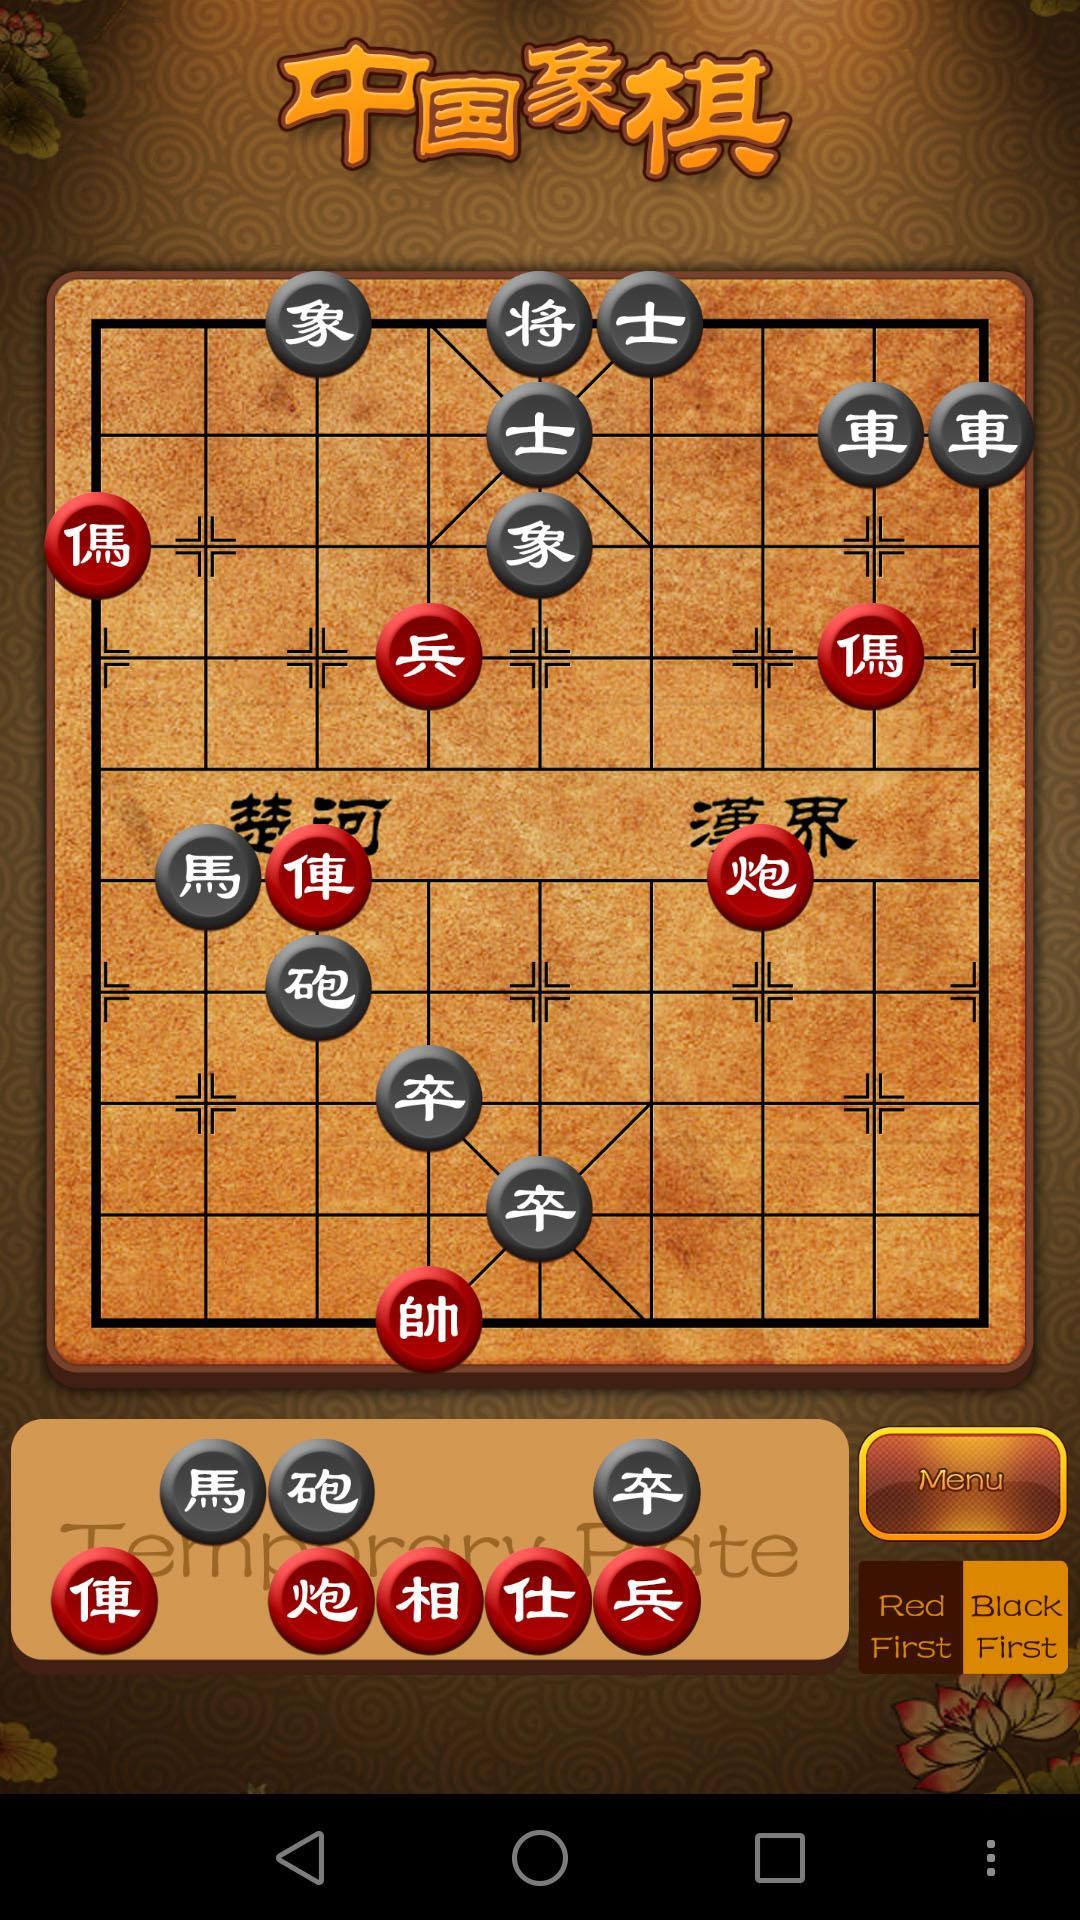 Chinese Chess, Xiangqi - many endgame and replay 3.9.6 Screenshot 7